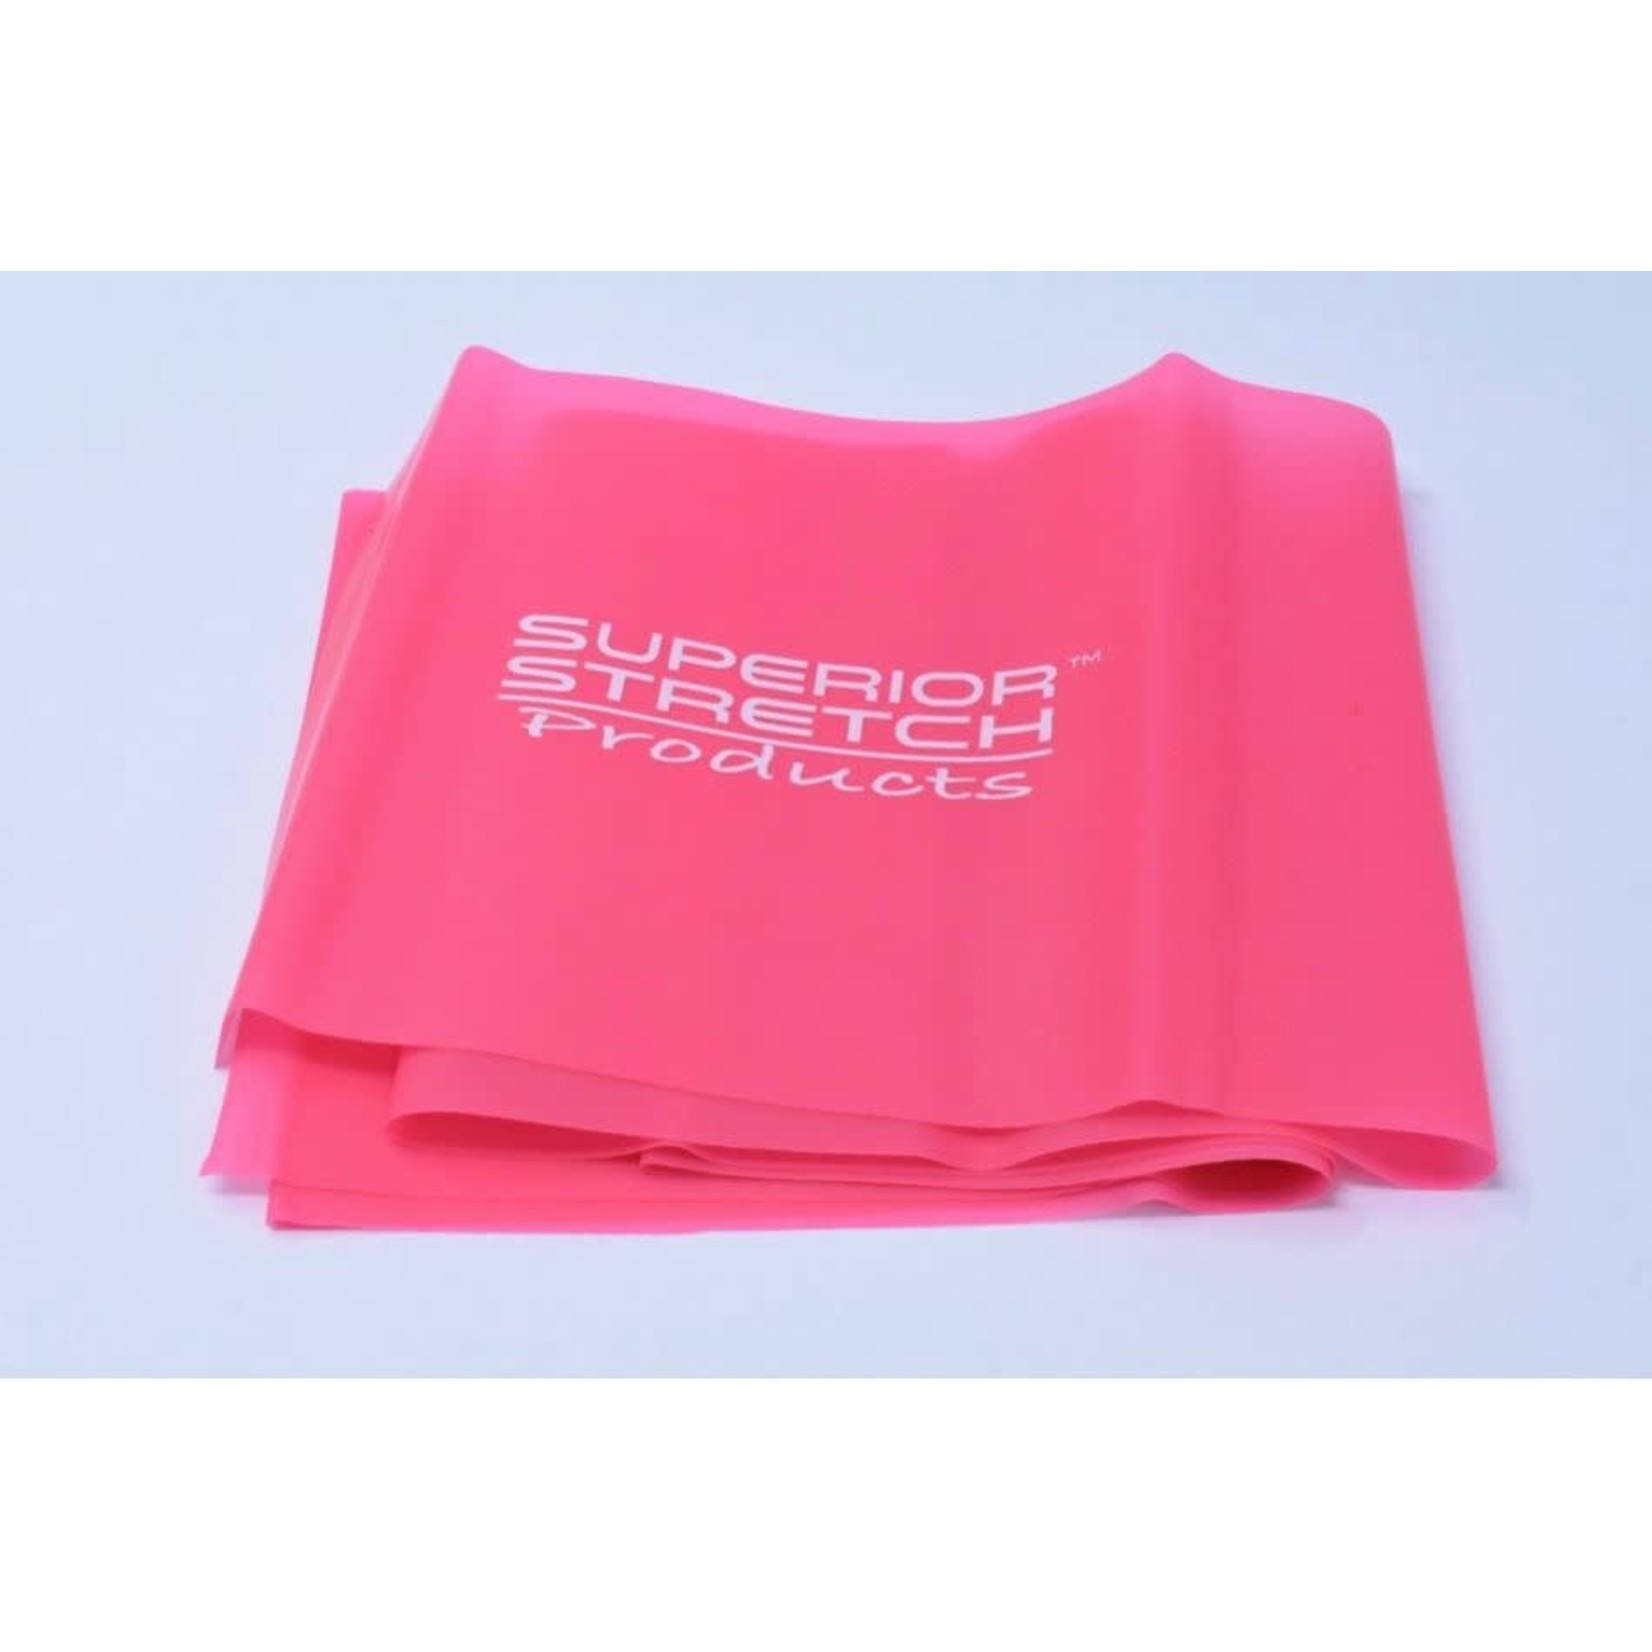 Superior Stretch Clover Bands Pink